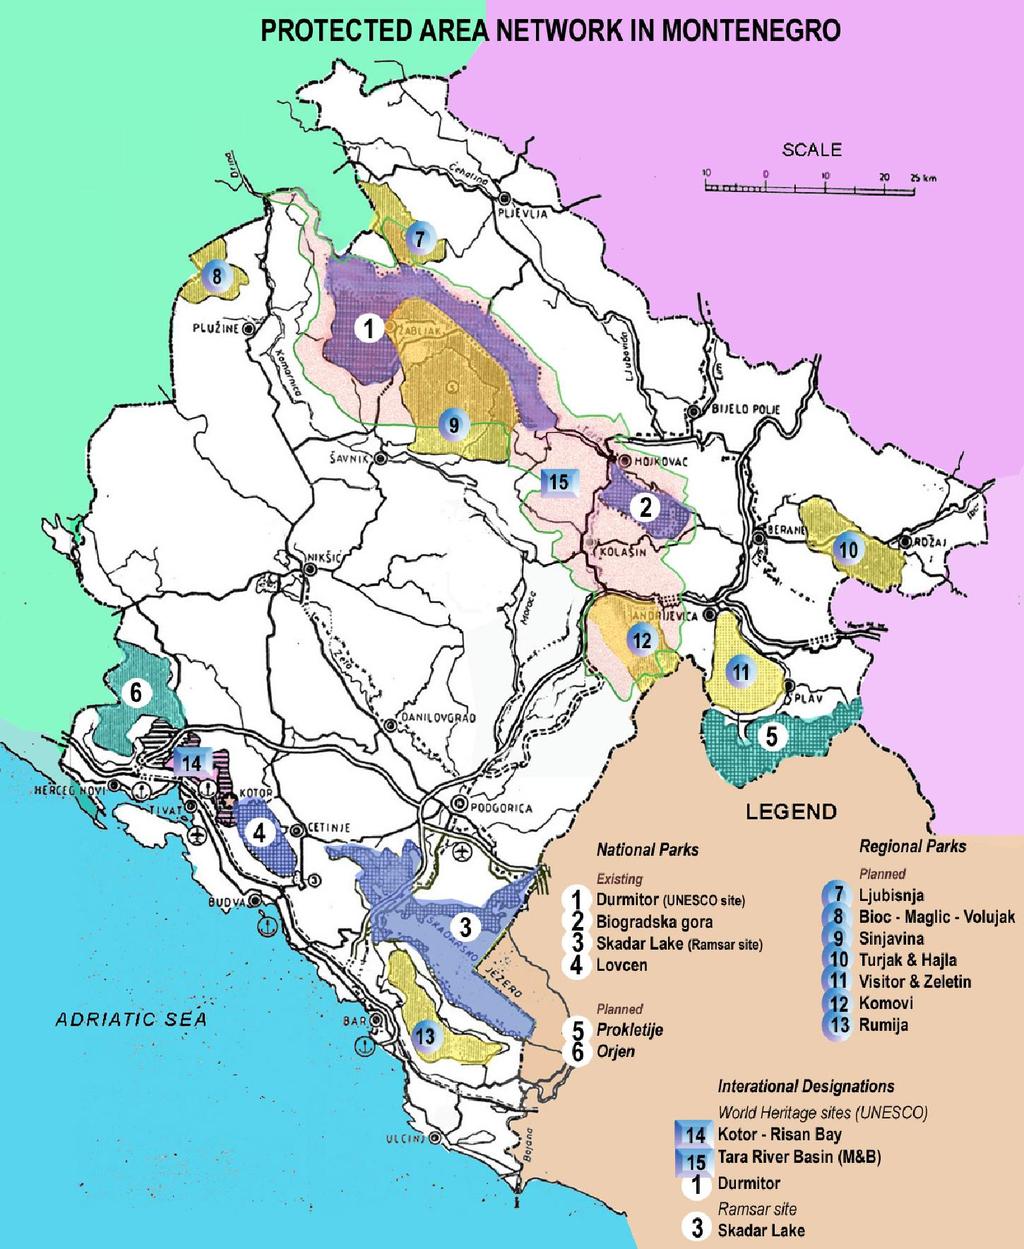 Management in Montenegro using RAPPAM Methodology.